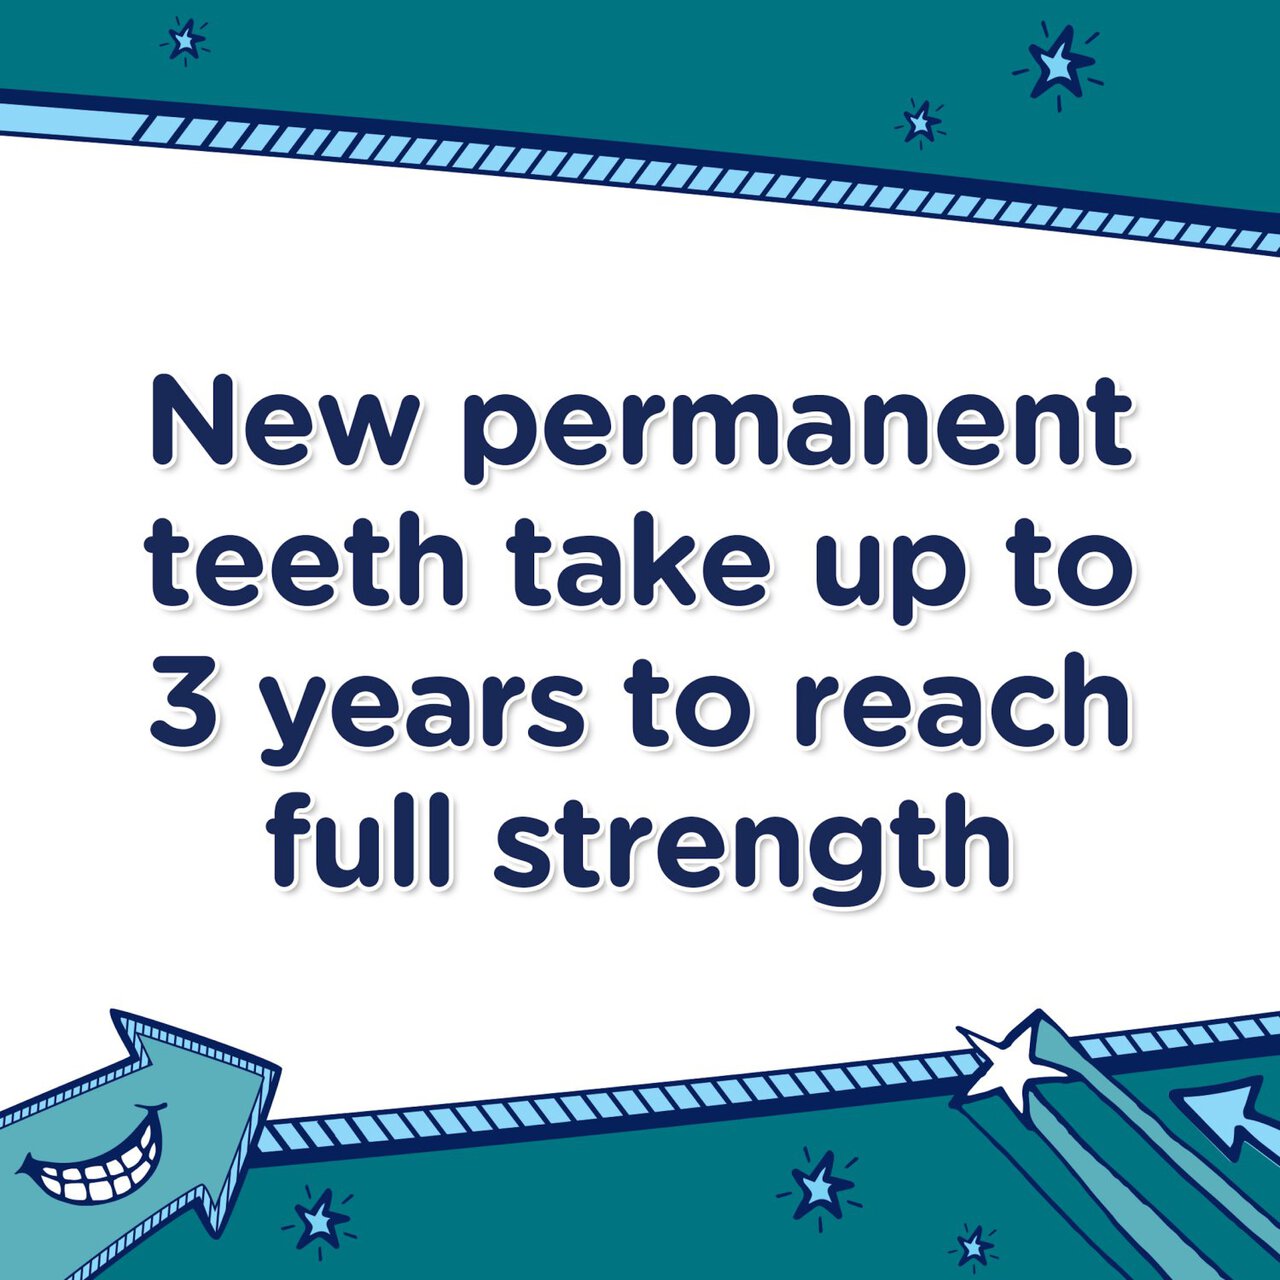 Aquafresh Advance Kids Toothpaste 9-12 Years Mixed Teeth 75ml